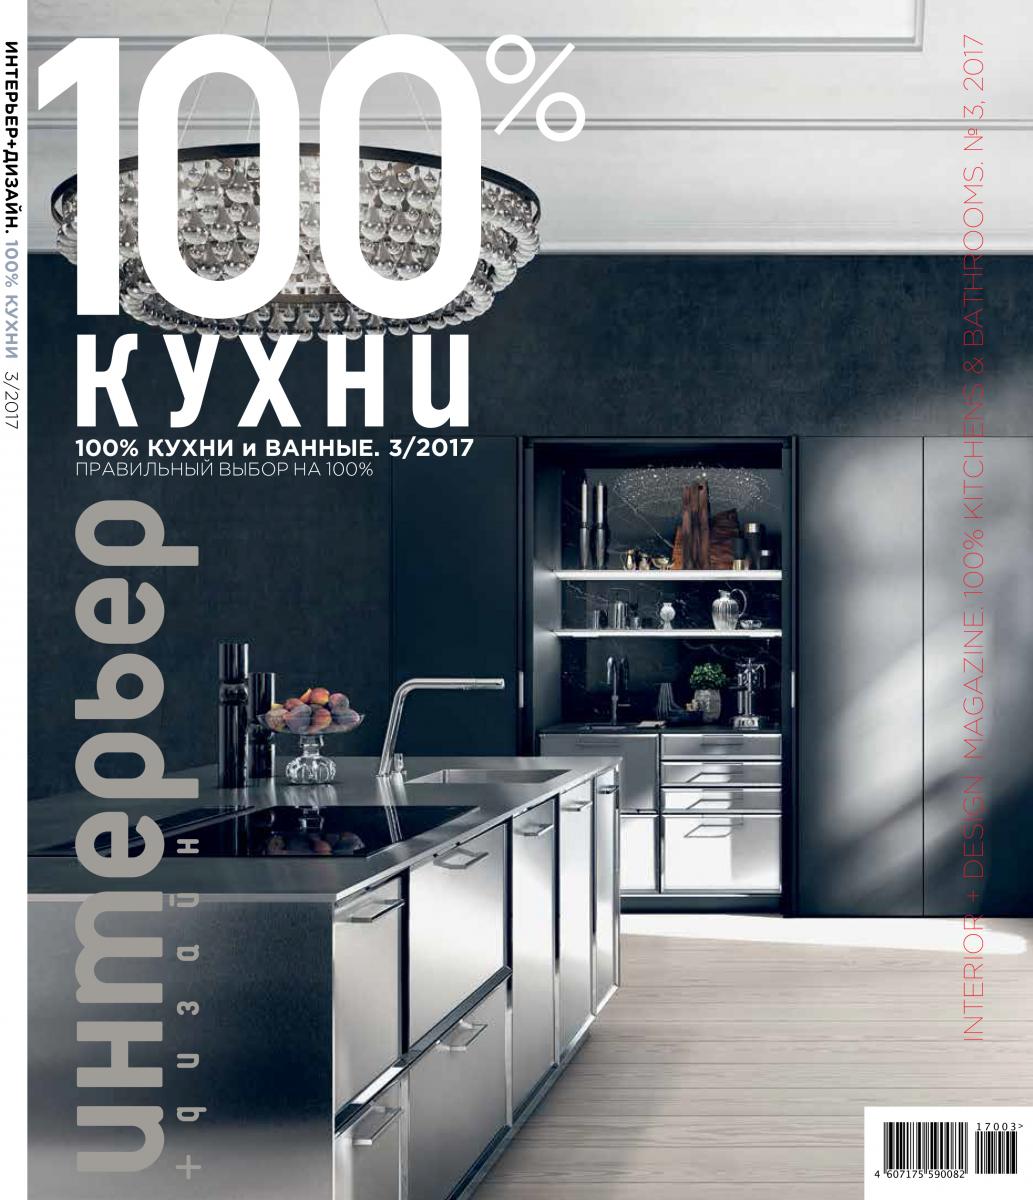 INTERIOR DESIGN MAGAZINE, 100% KITCHENS AND BATHROOMS, 03.2017, RUSSIA